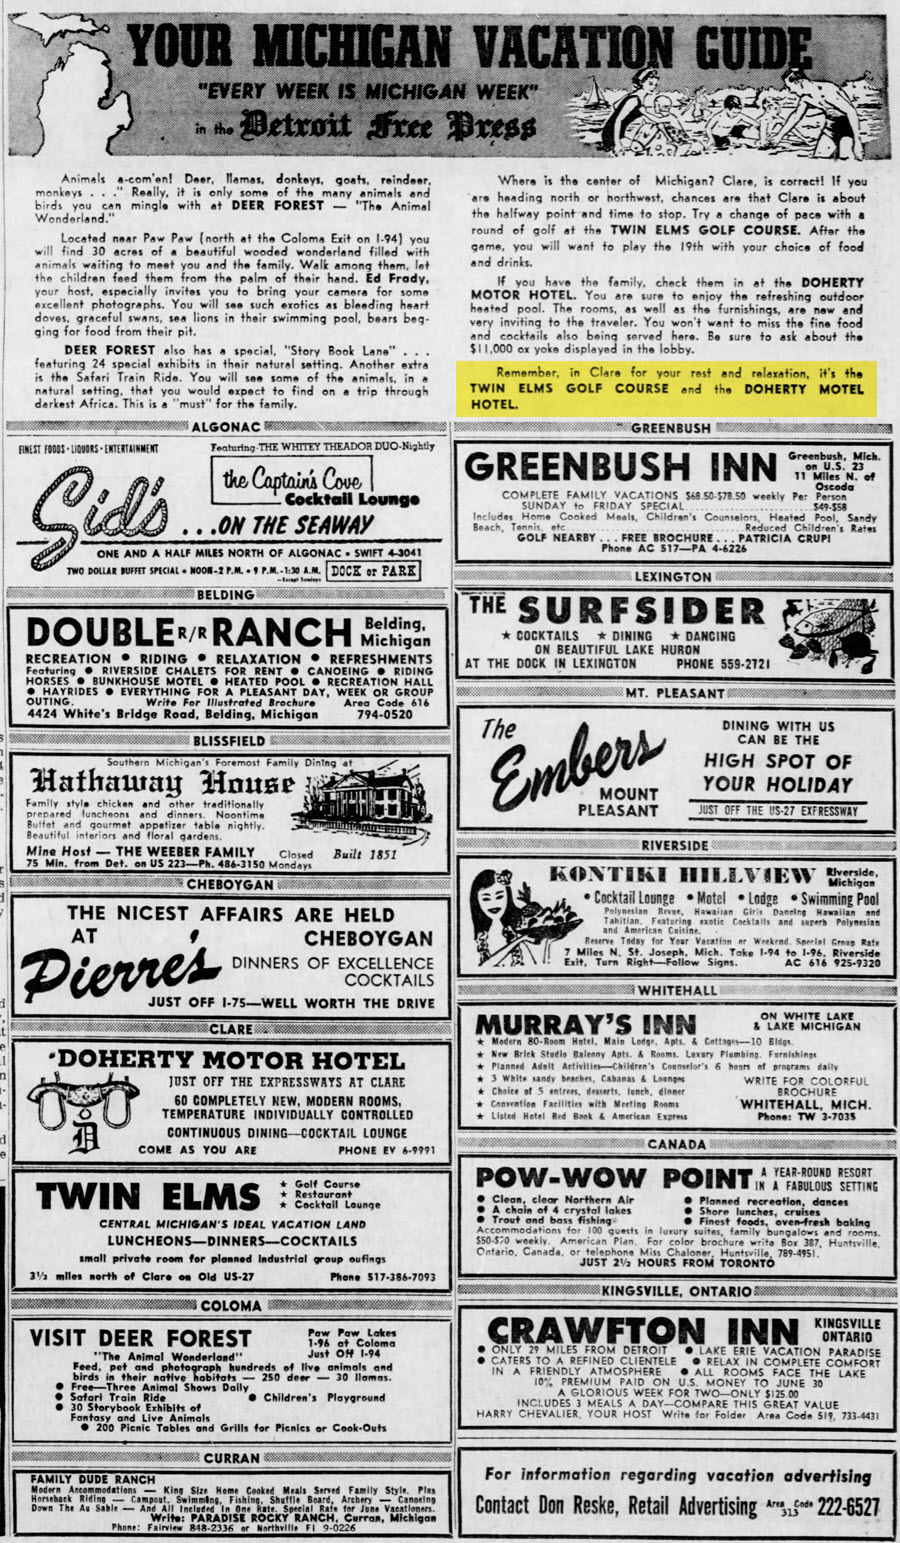 Doherty Hotel Motel (Doherty Motel Hotel, Doherty Motor Hotel) - July 1965 Ad